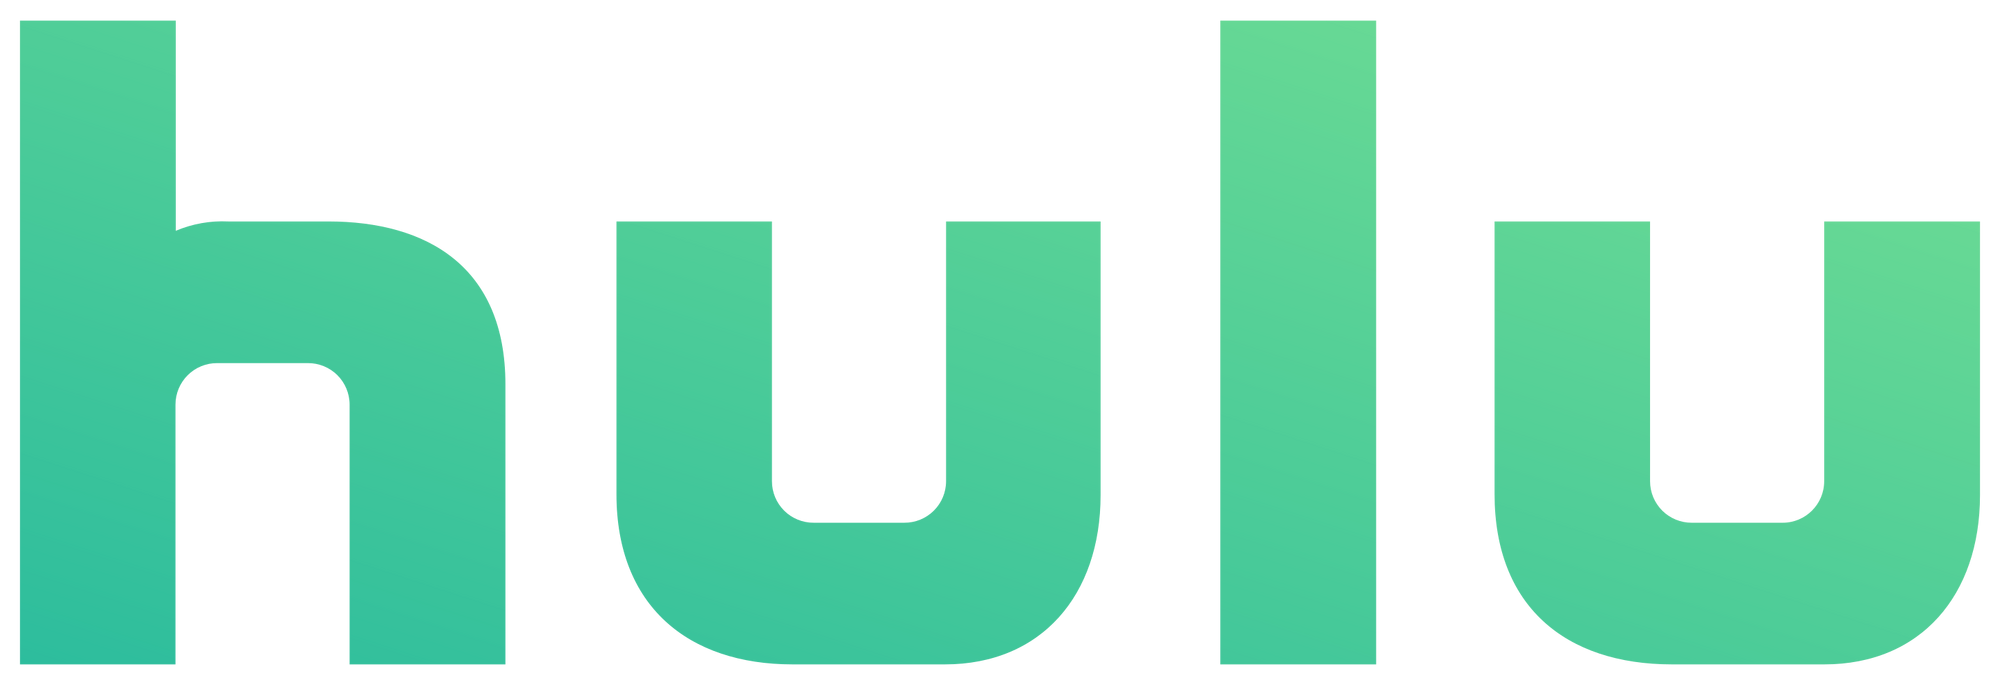 Hulu | Corus Entertainment Fandom | Fandom